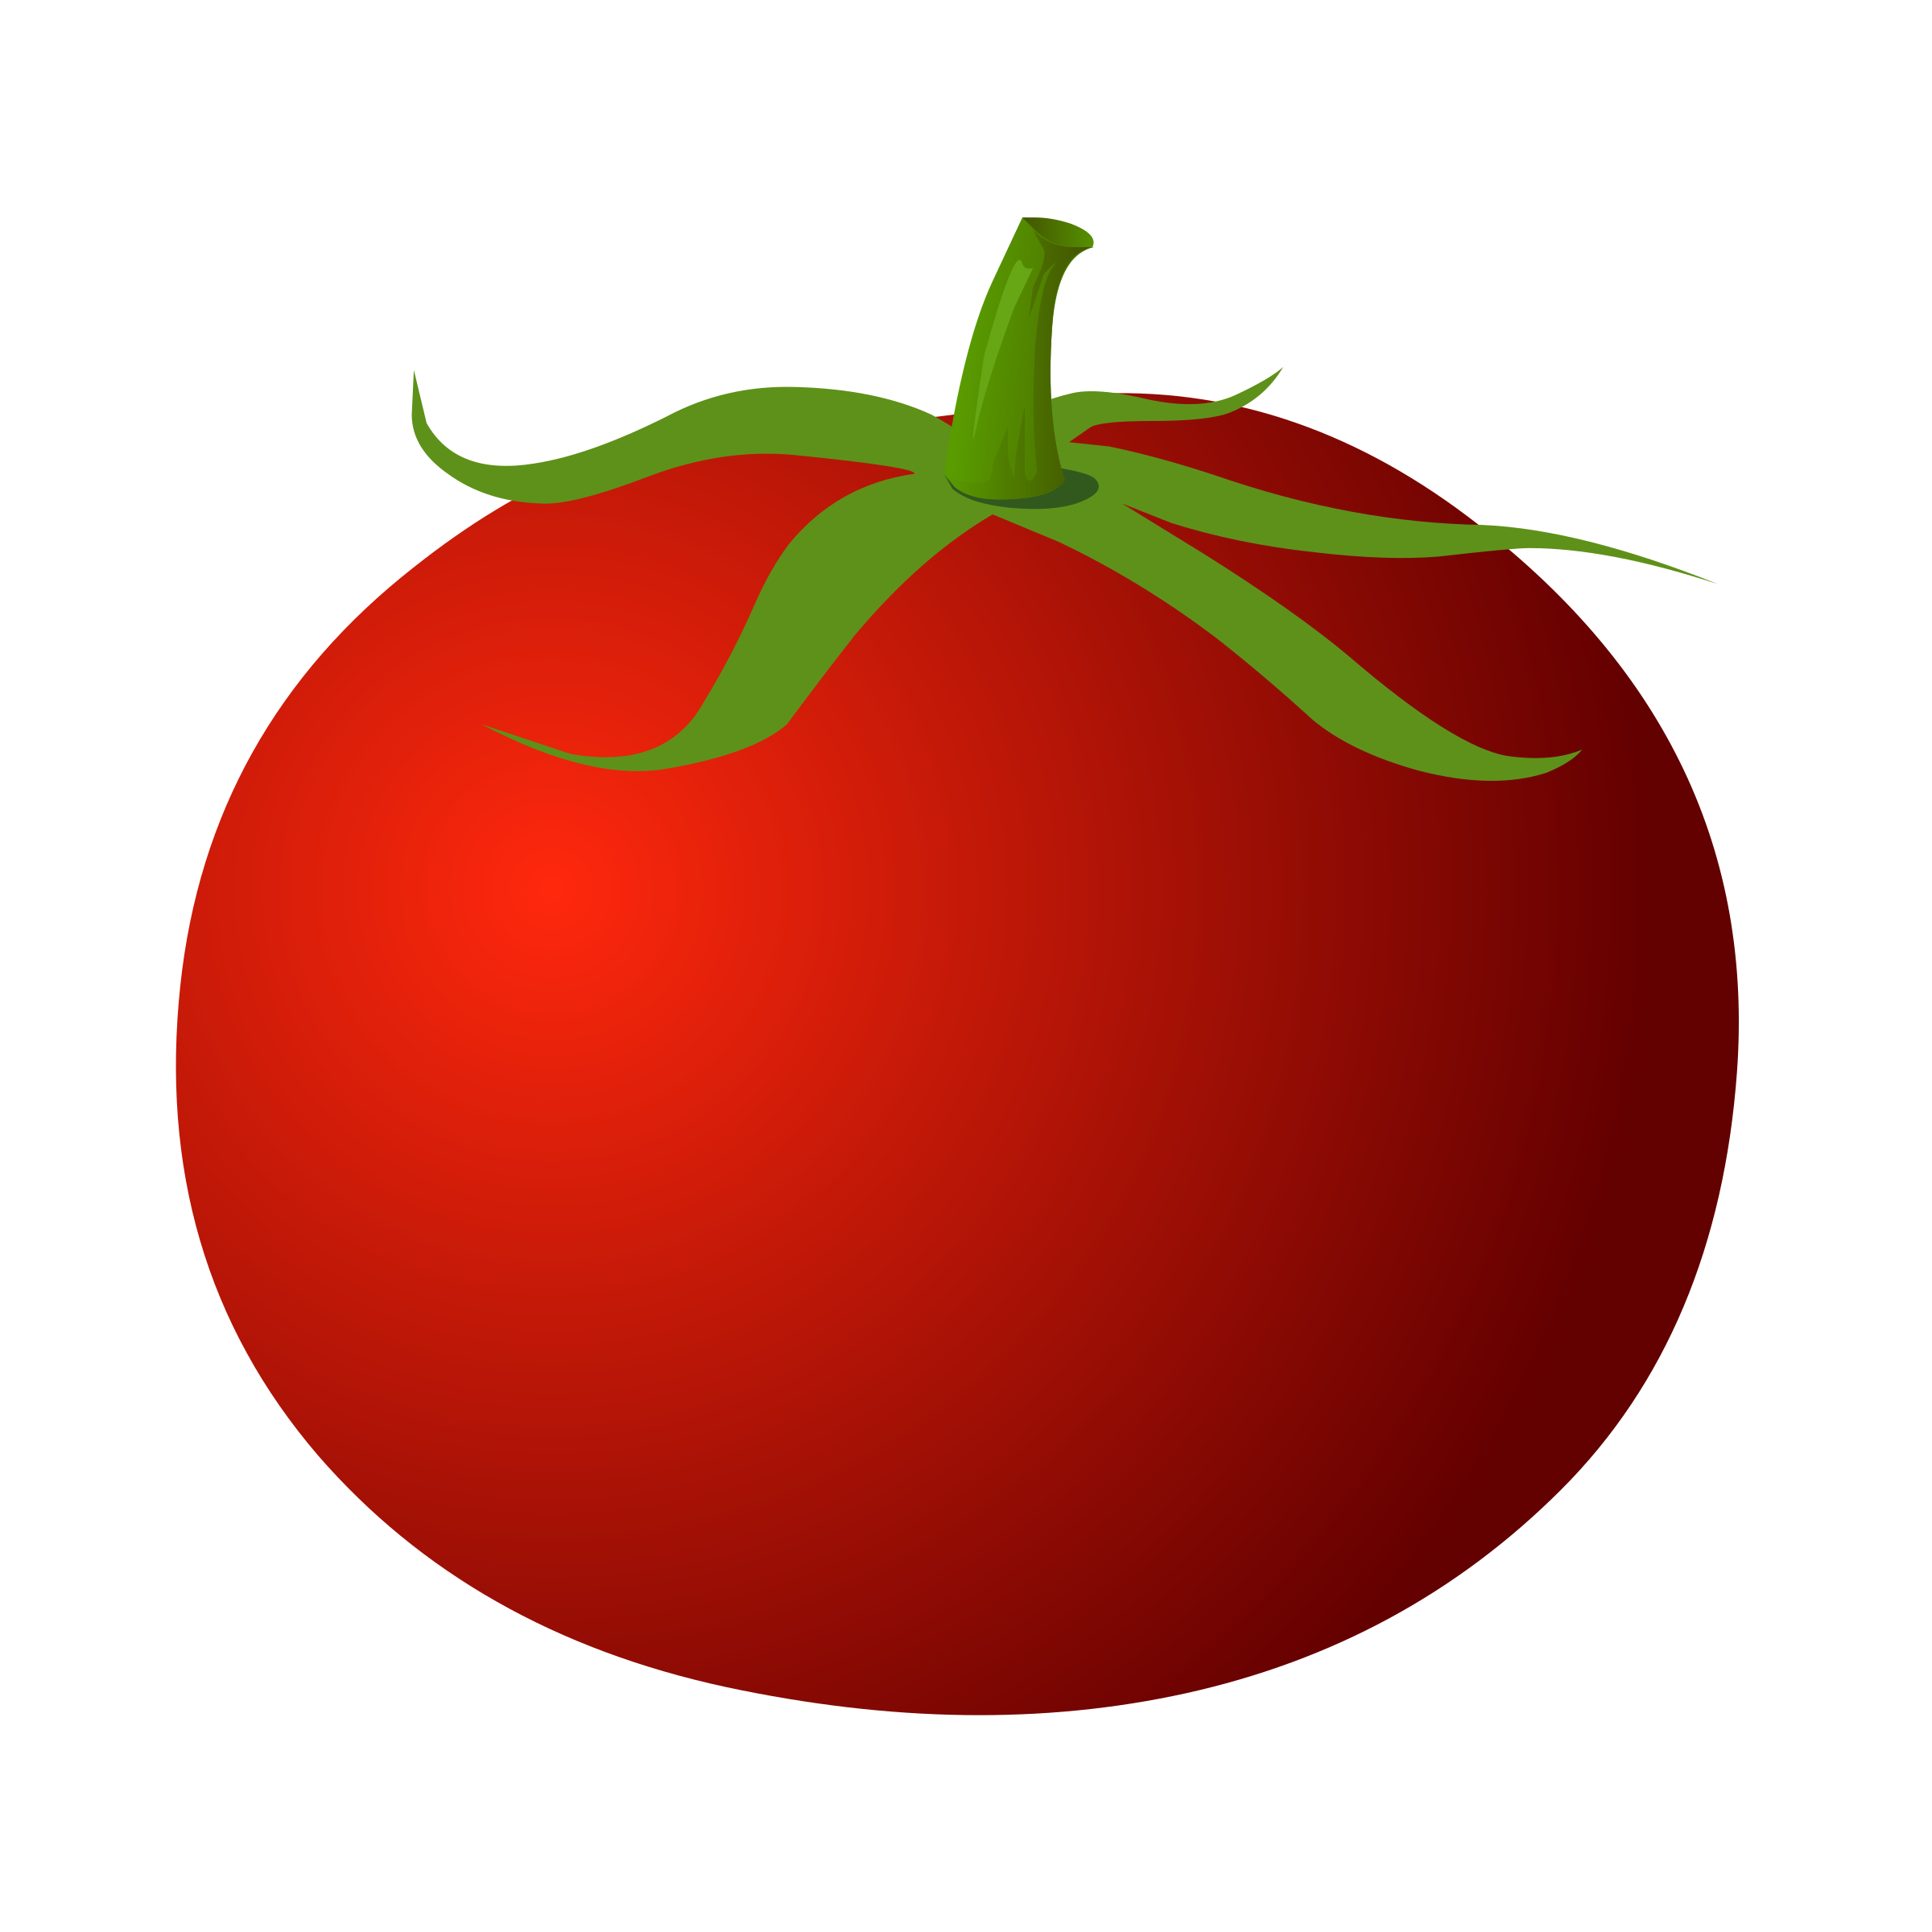 Tomatoes clipart rotten tomato. Panda free images tomatoclipart